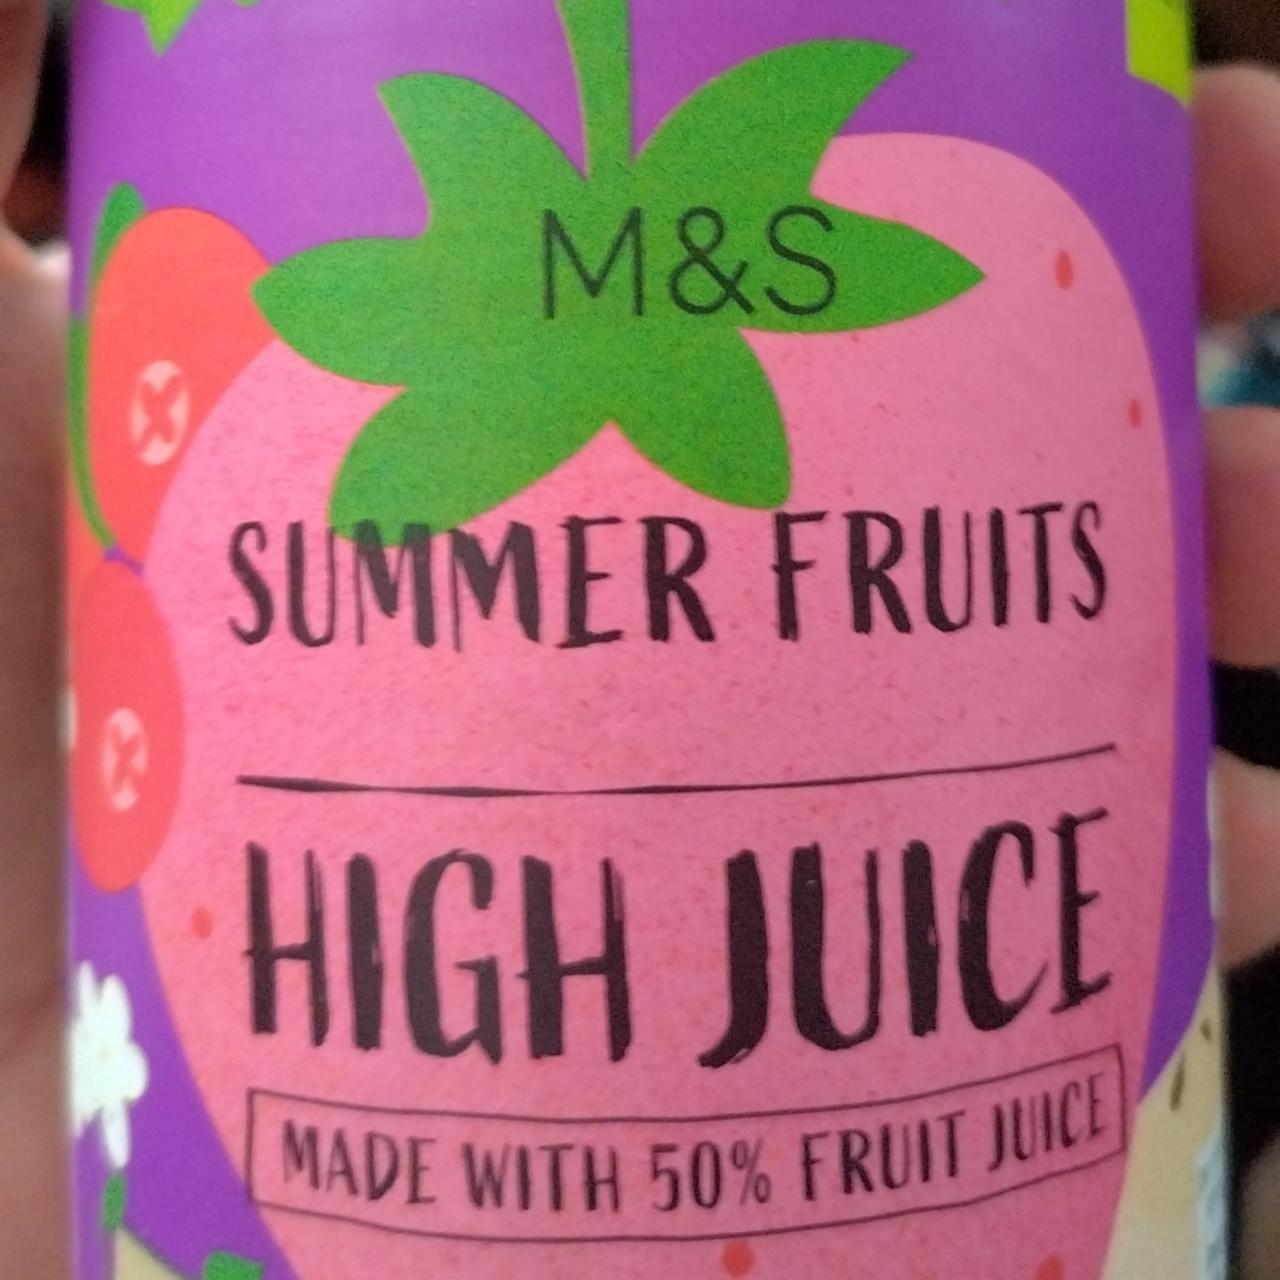 Fotografie - m&s summer fruits High juice concentate